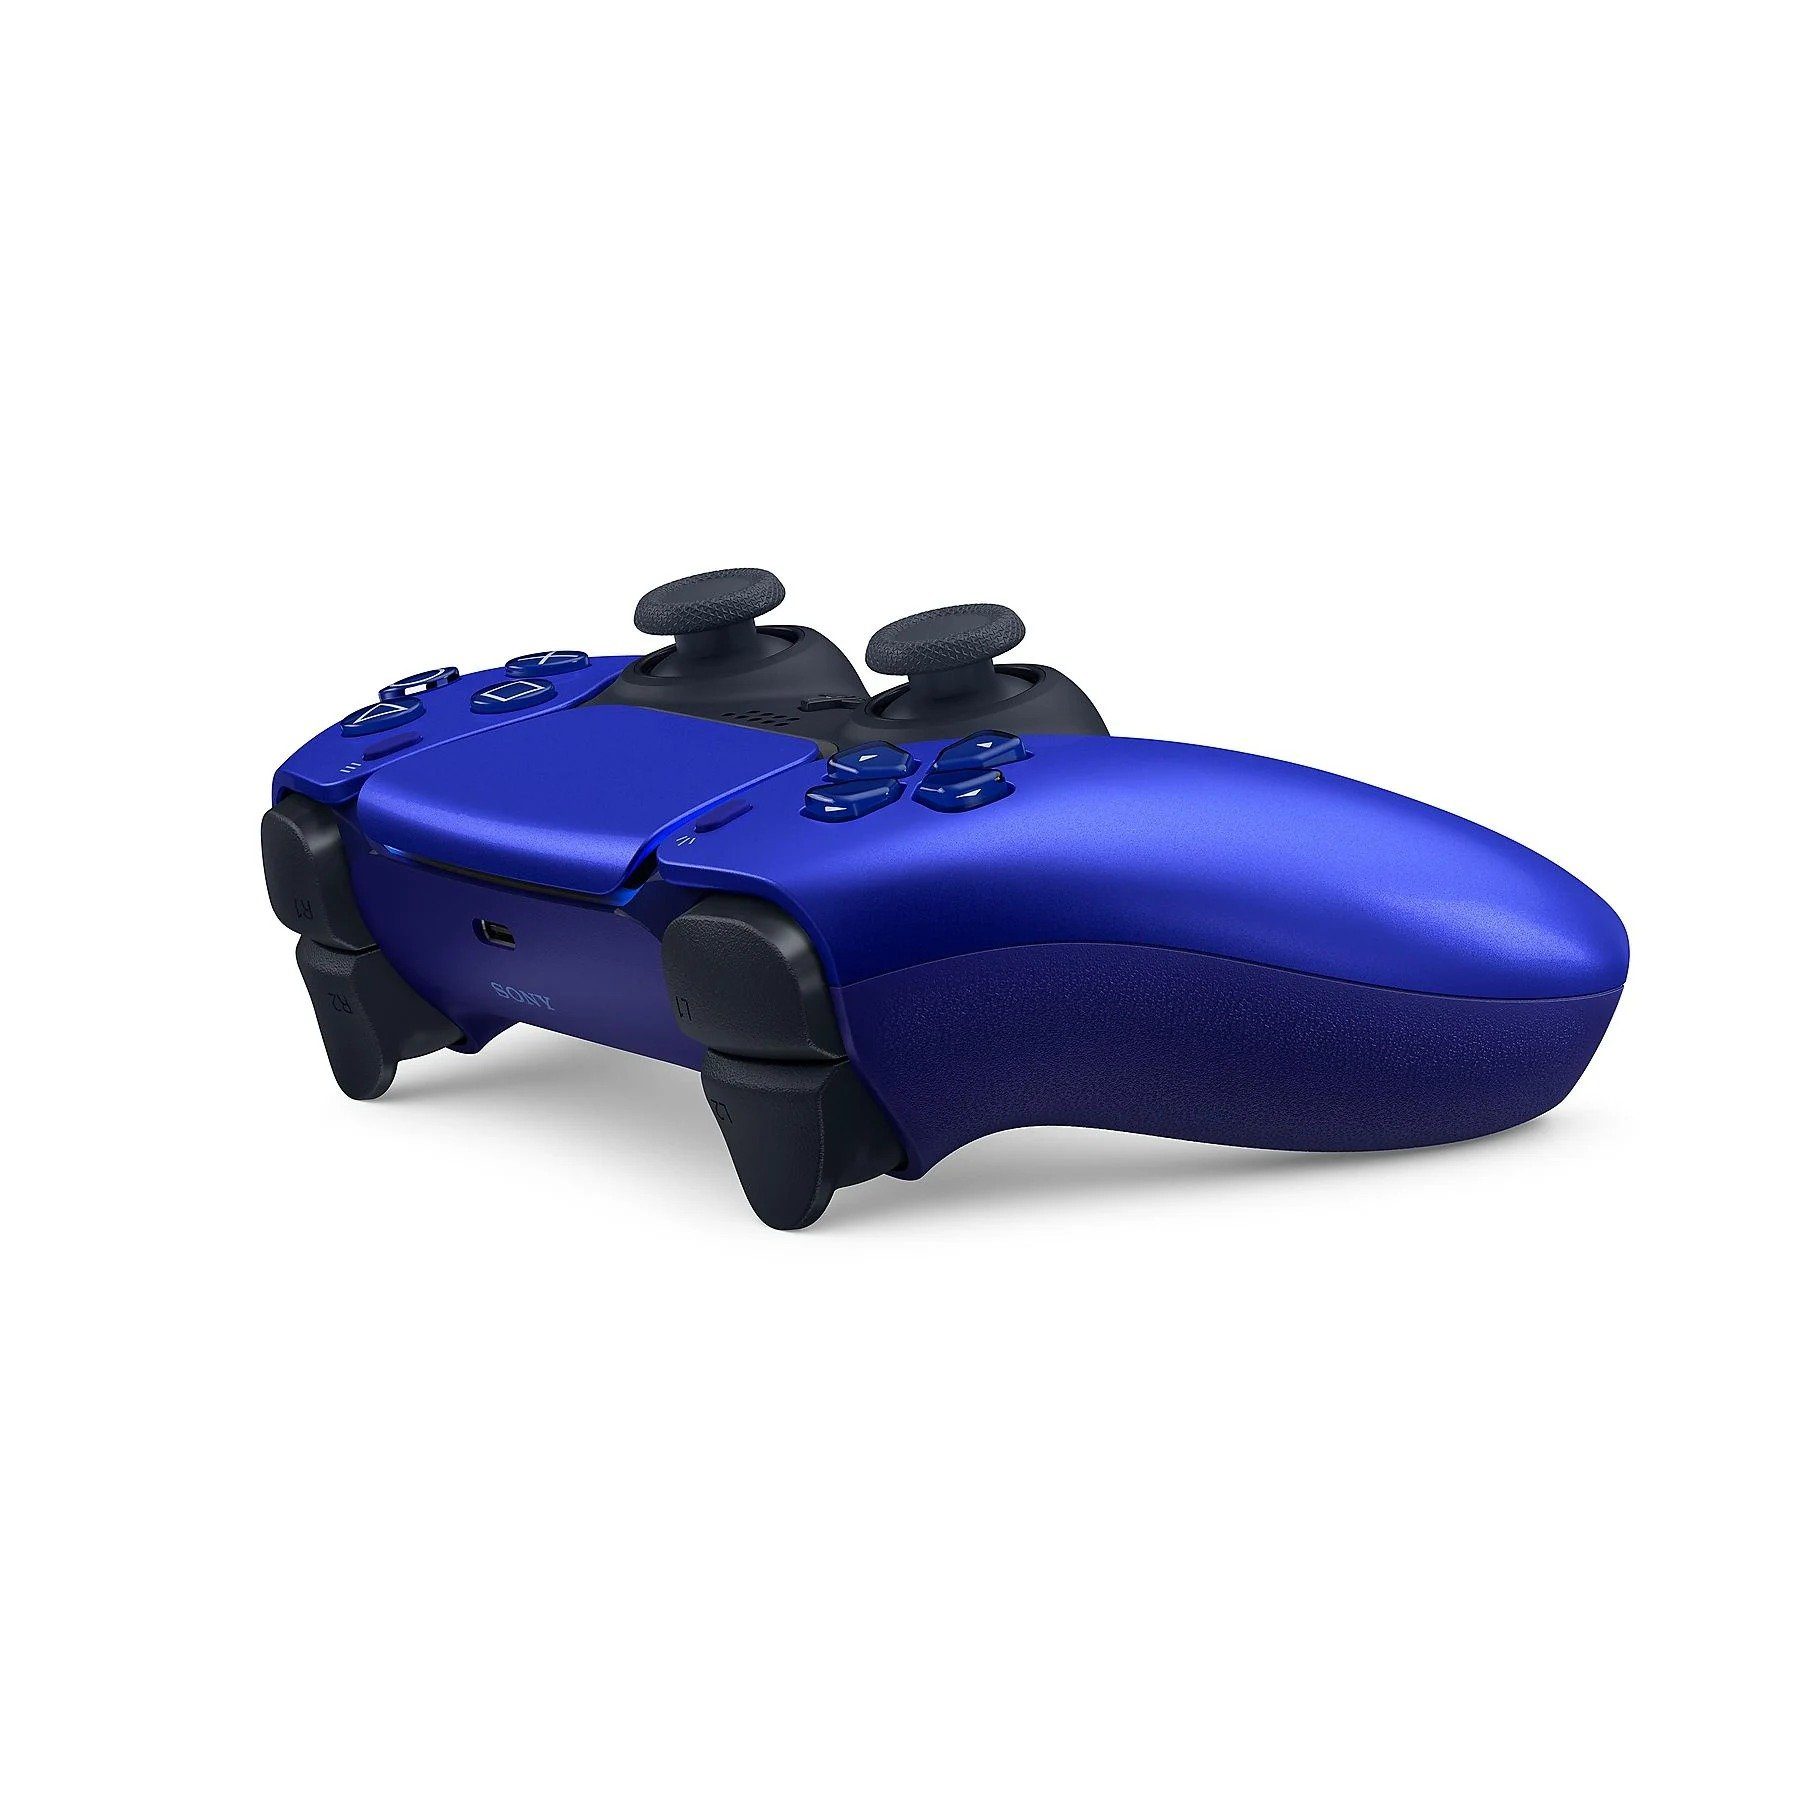 Playstation 5 5-Controller PlayStation Original Controller Blue DualSense Cobalt Sony Wireless